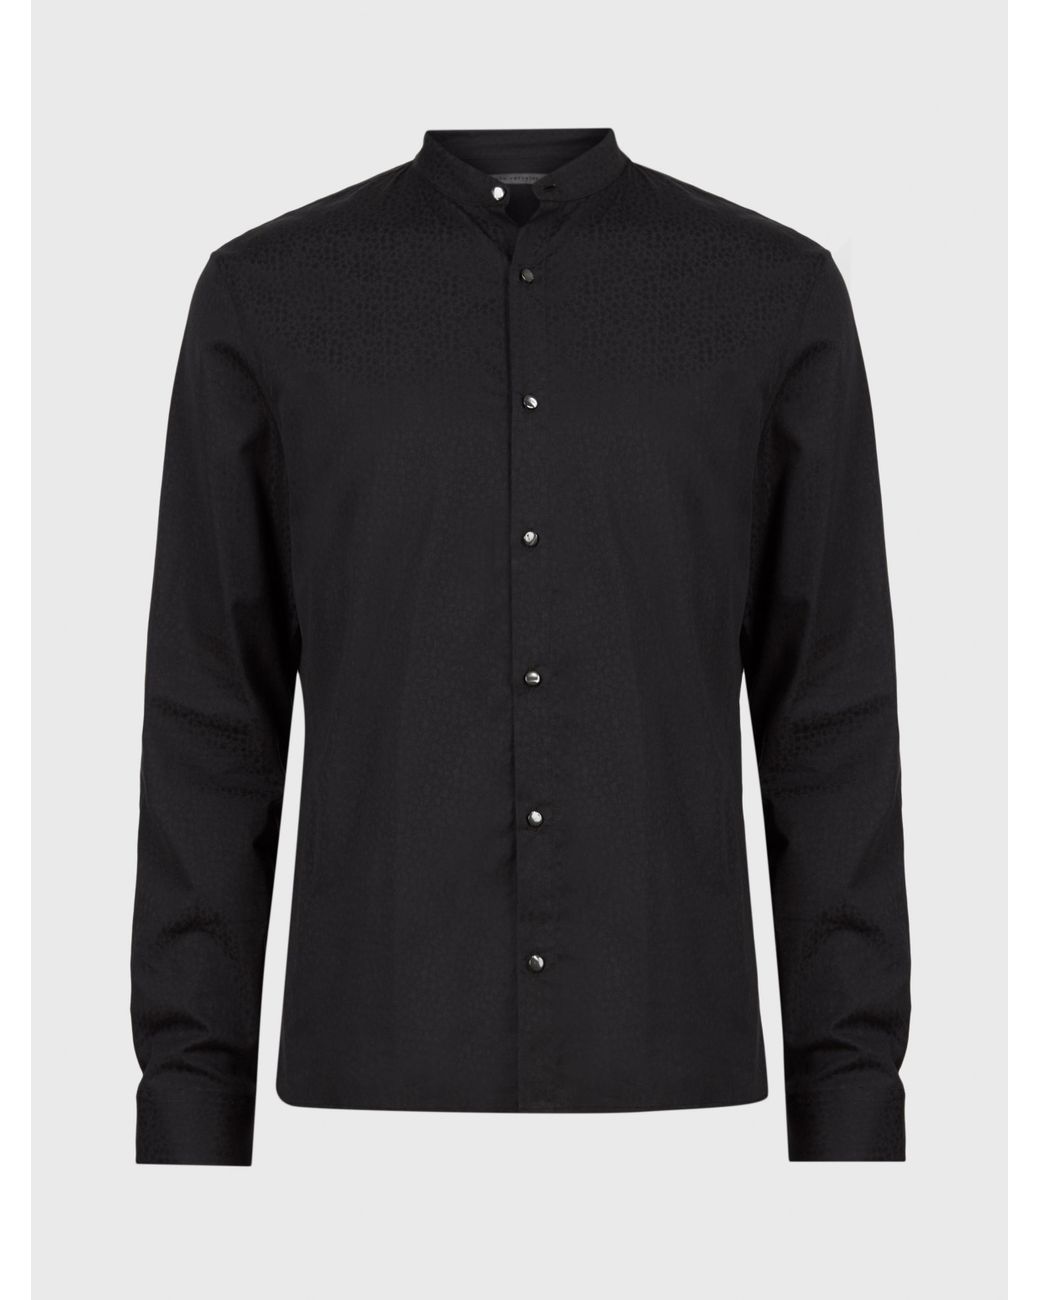 John Varvatos Band Collar Shirt in Black for Men | Lyst